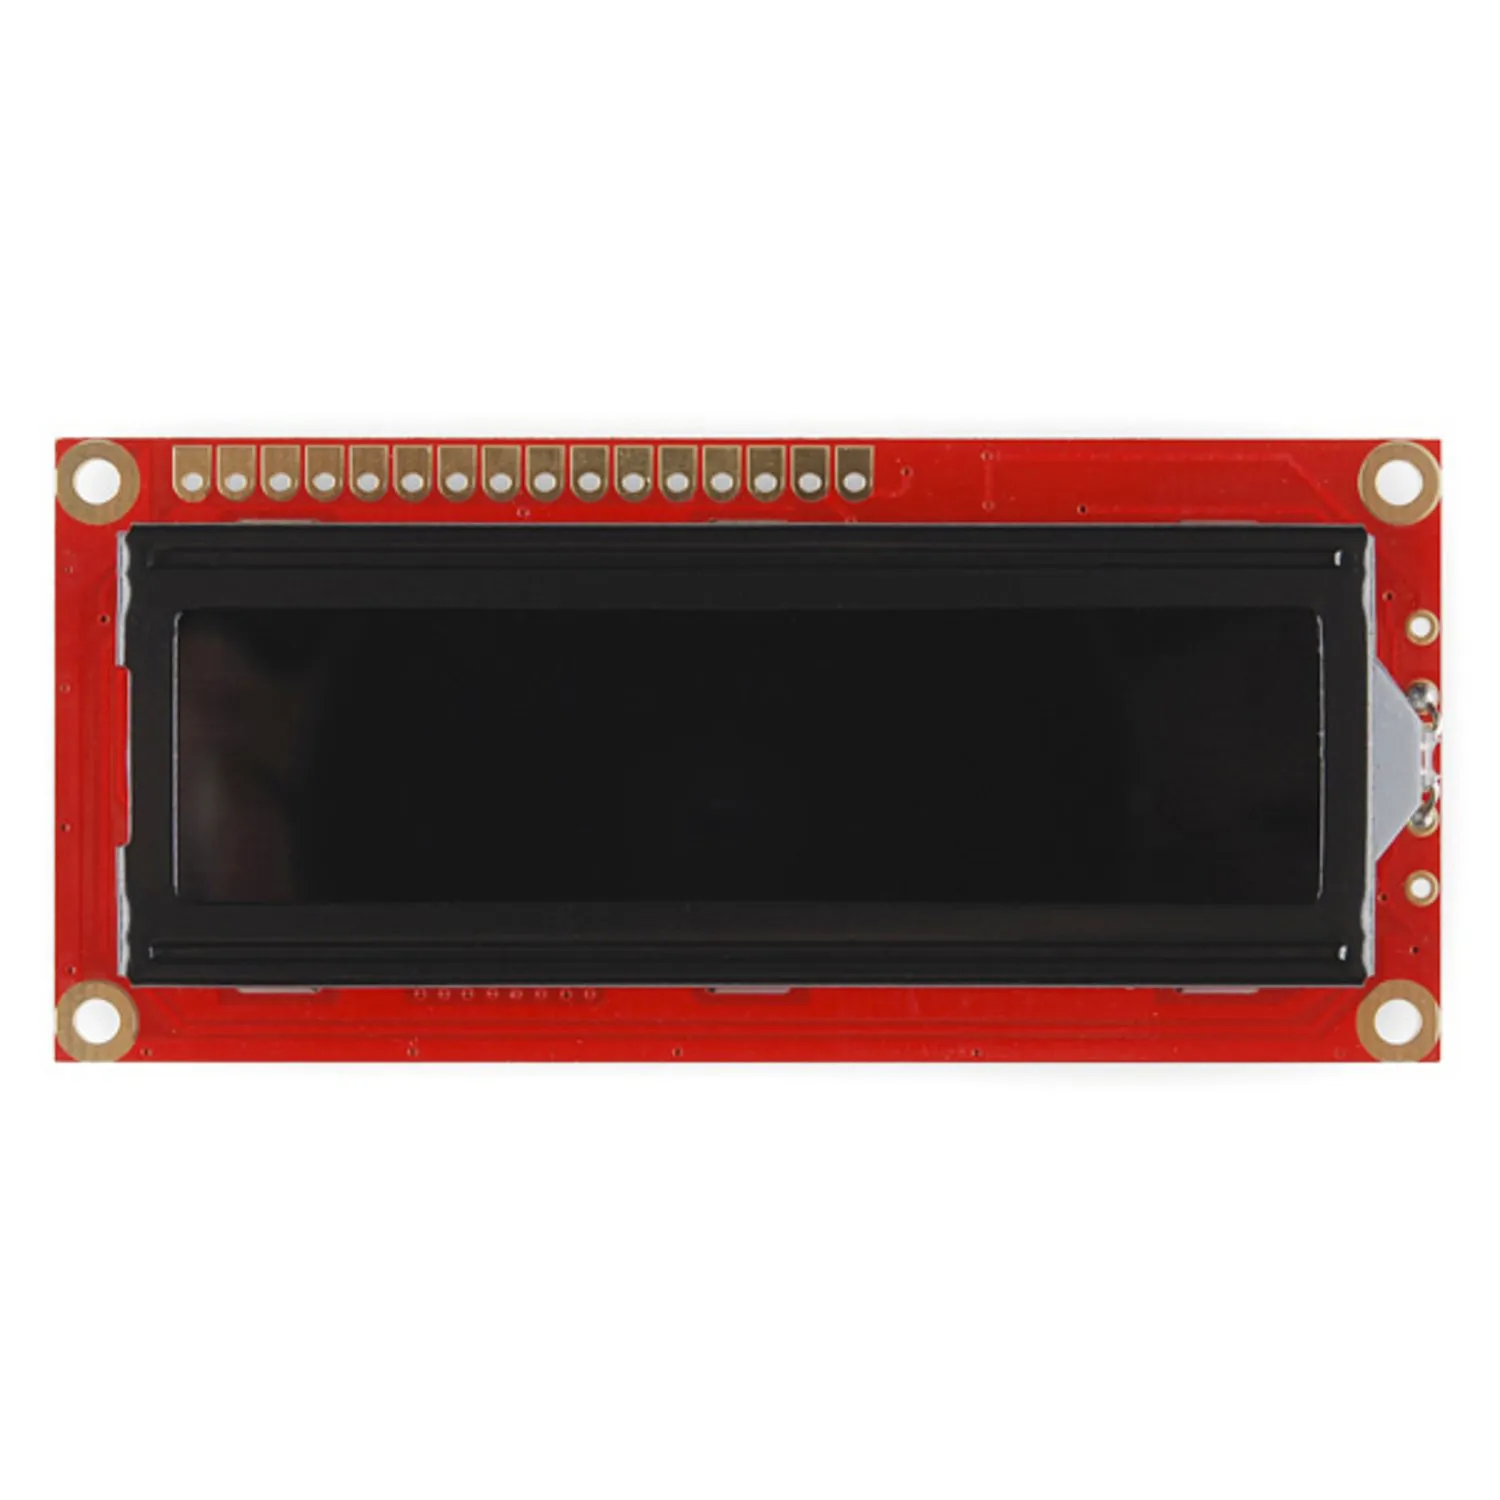 Photo of Basic 16x2 Character LCD - White on Black 5V